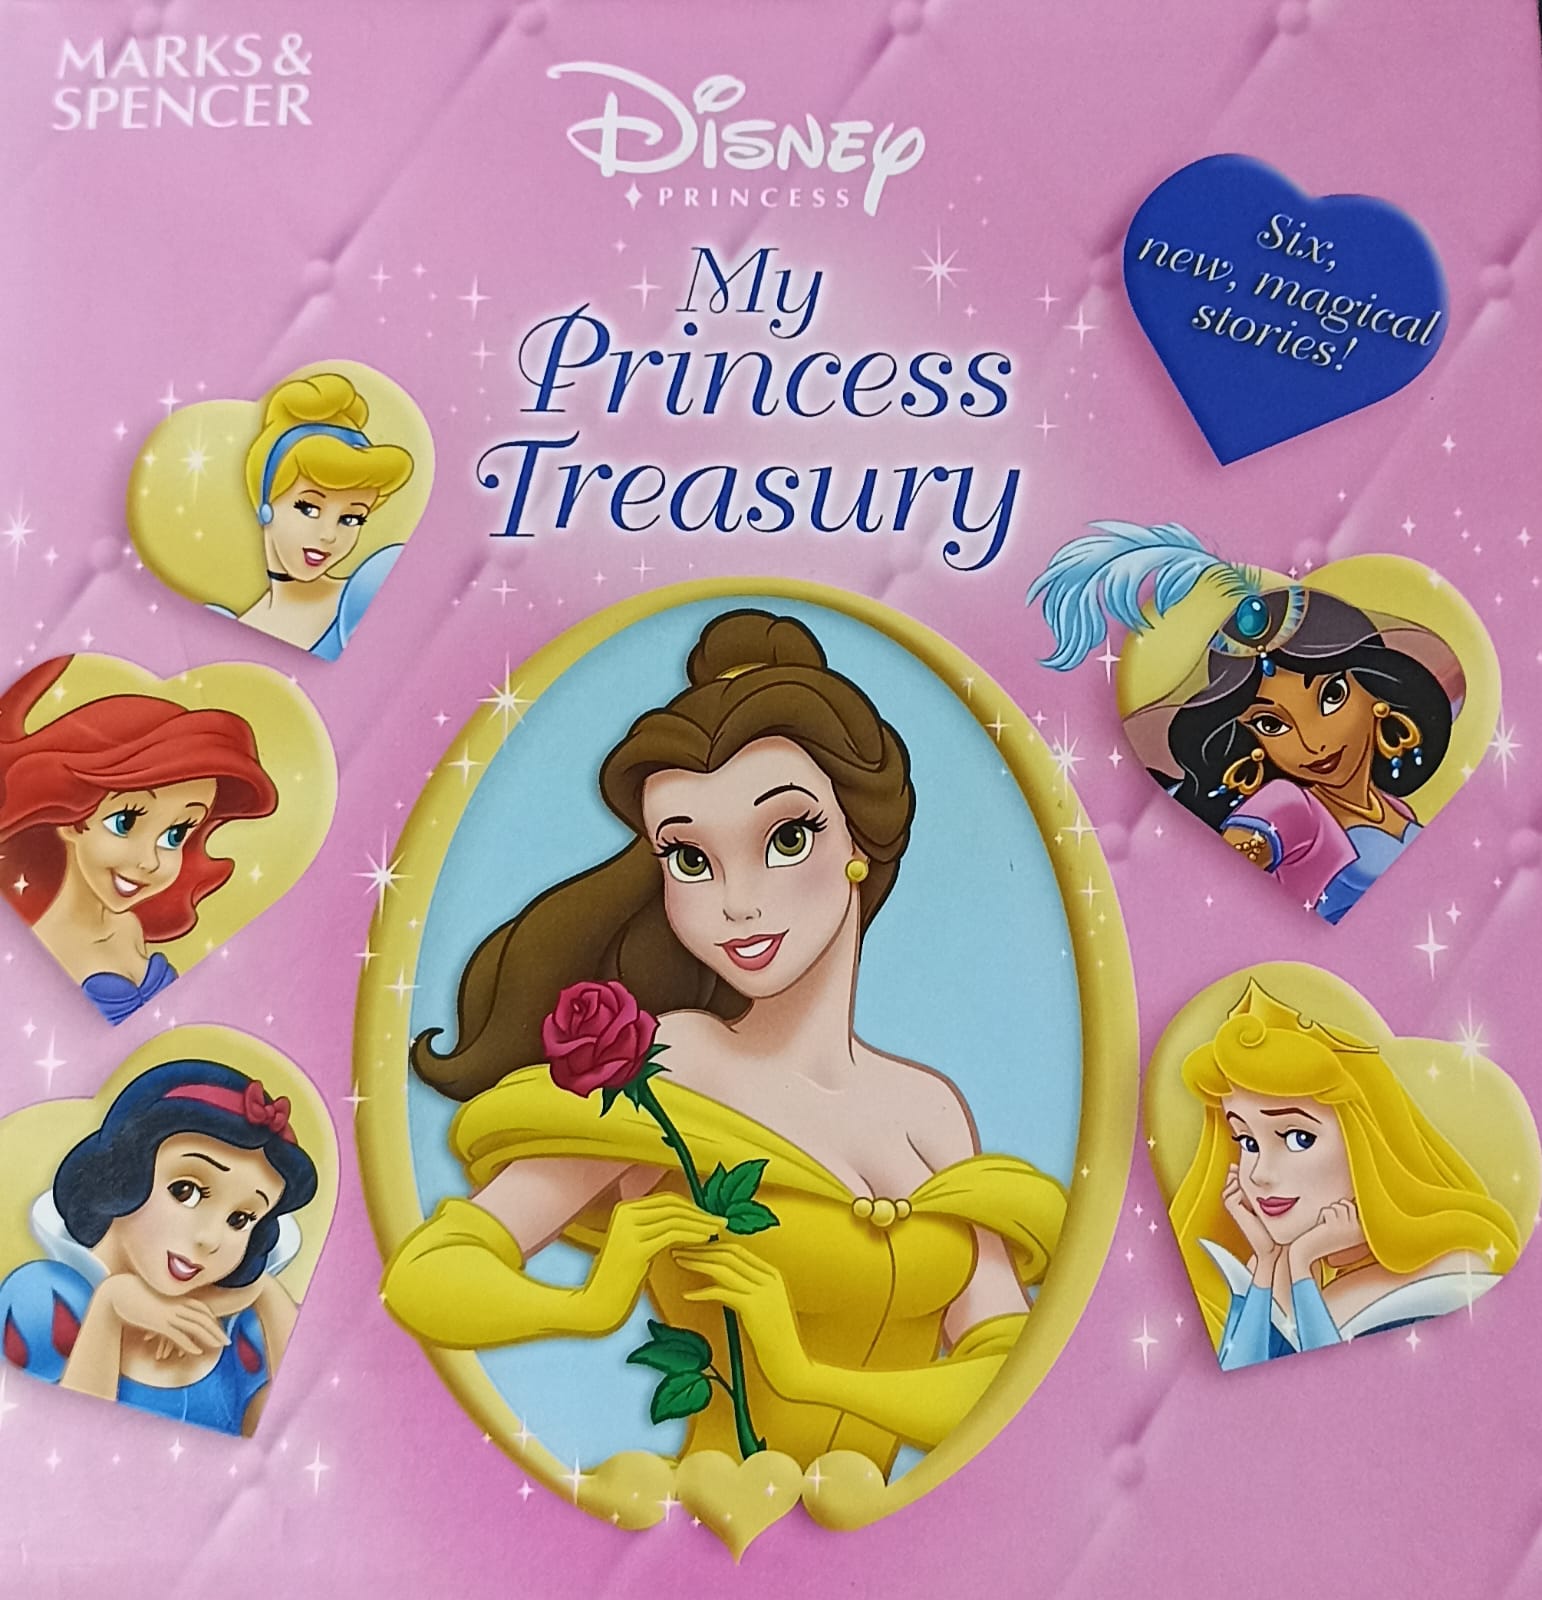 Disney Princess My princess treasury (Six new magical stories 